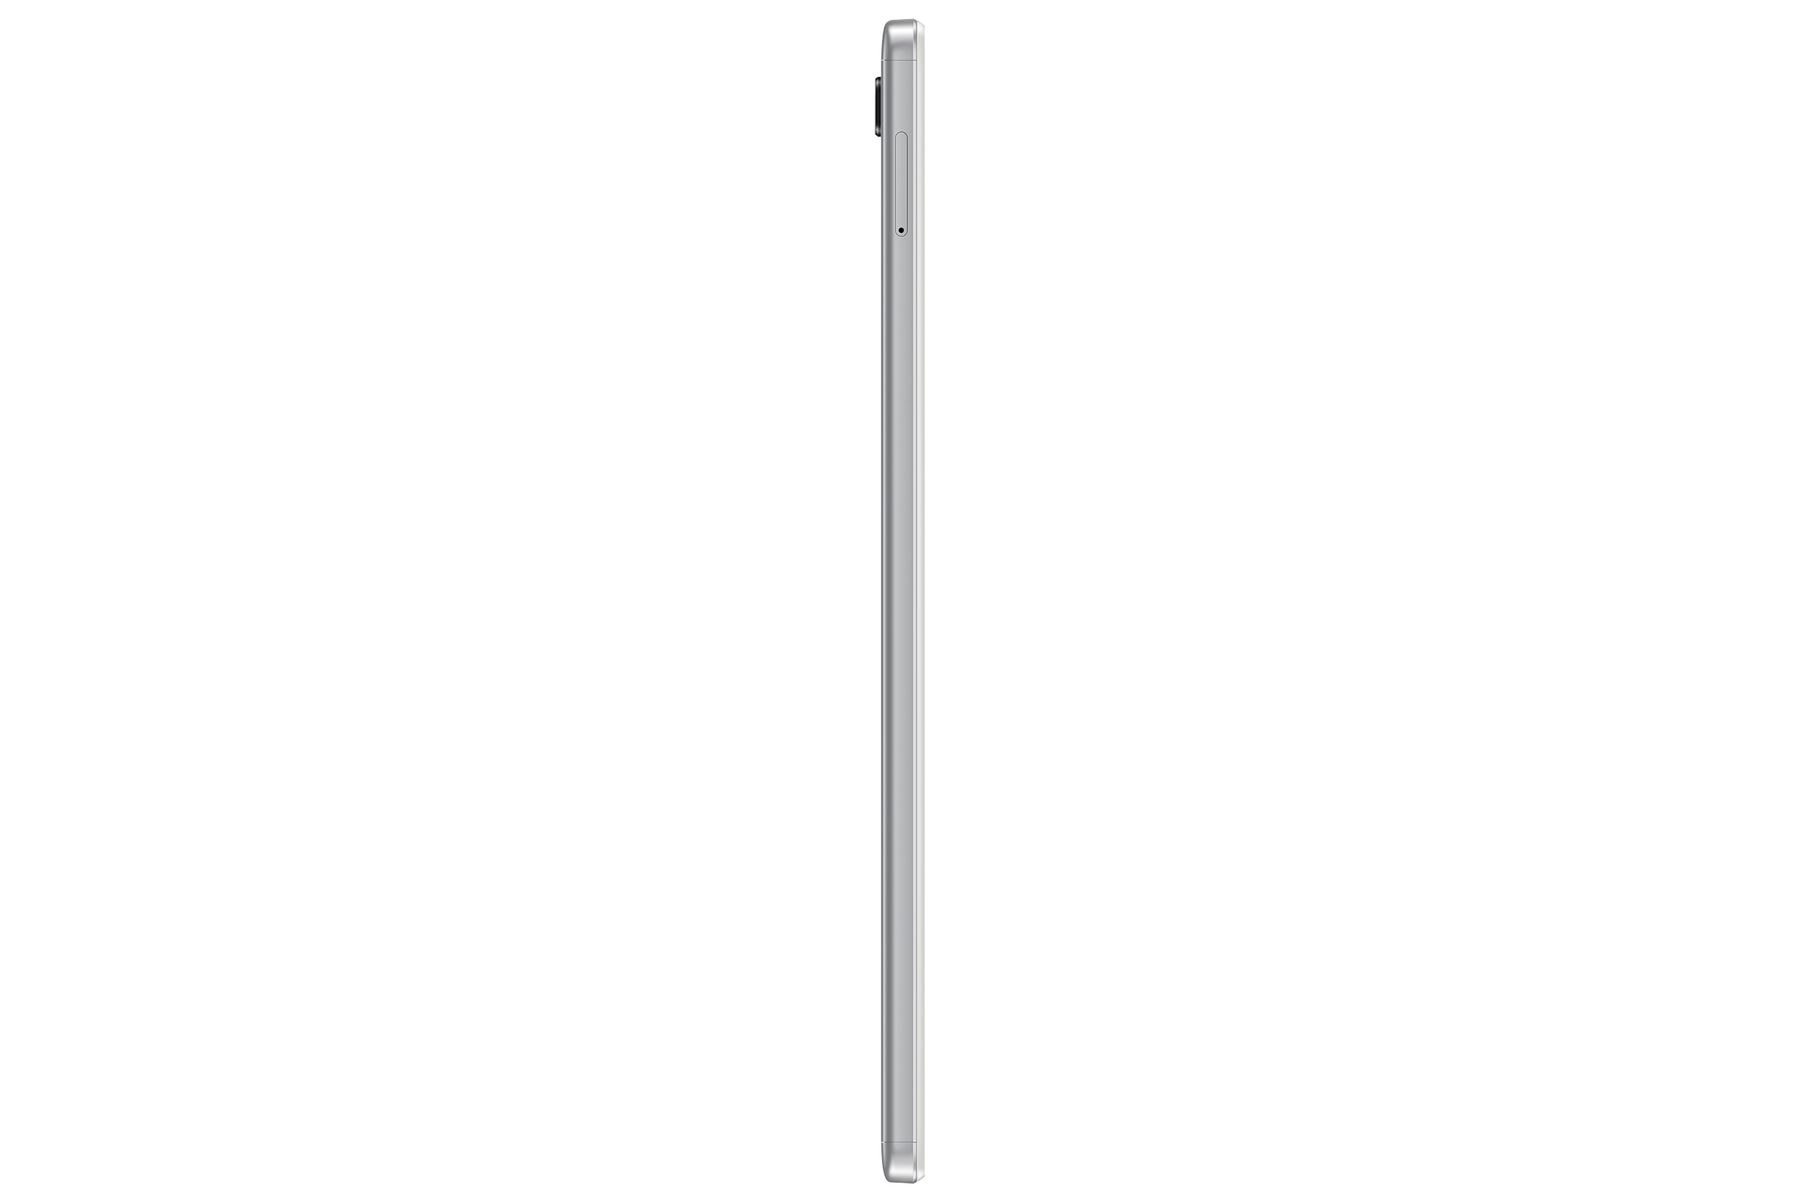 SAMSUNG T220 Galaxy Tab 32 Tablet, A7 8,7 Zoll, silber GB, Lite